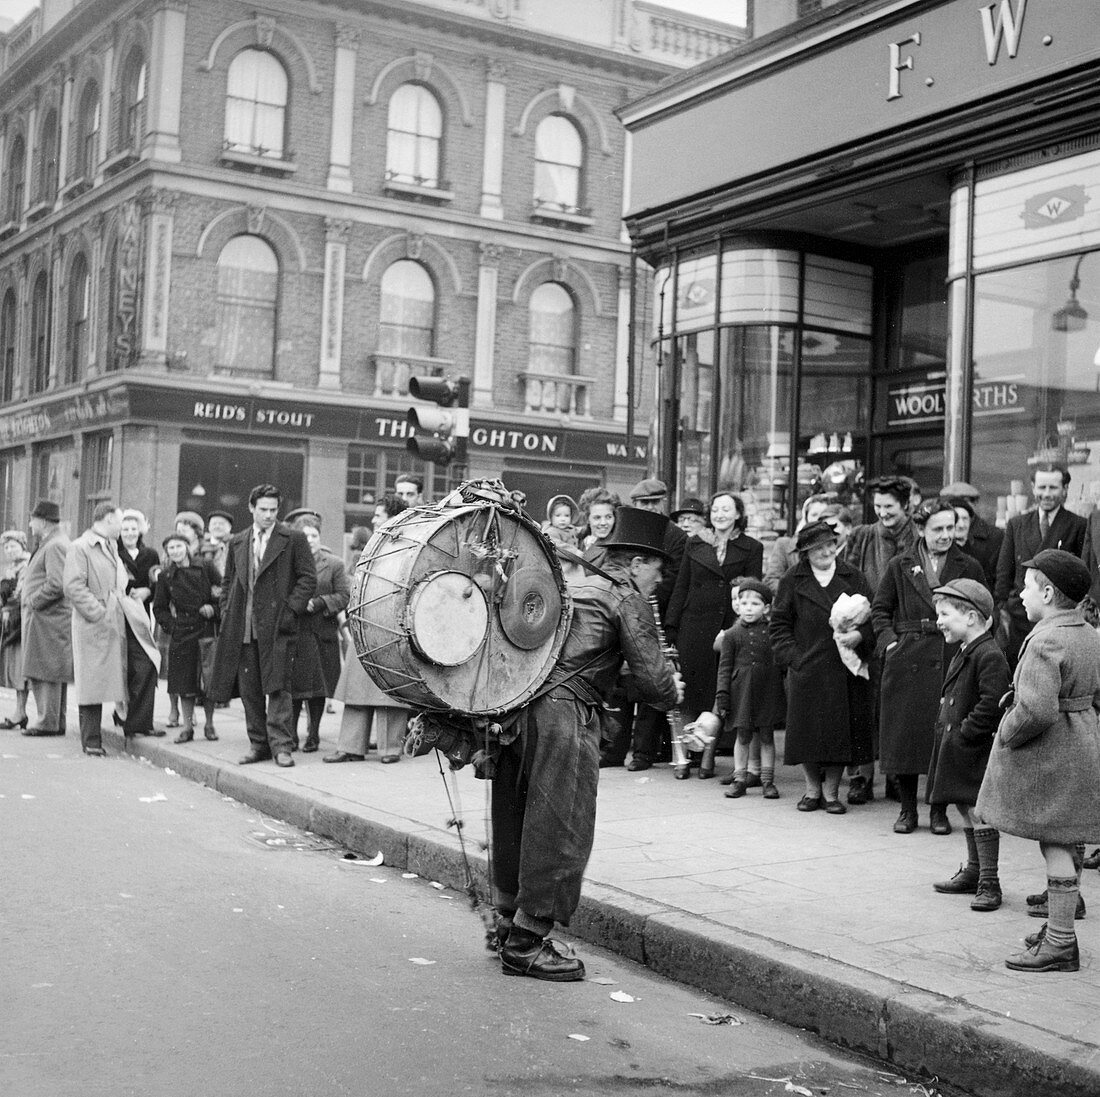 One-man band performing, Camden, London, 1952